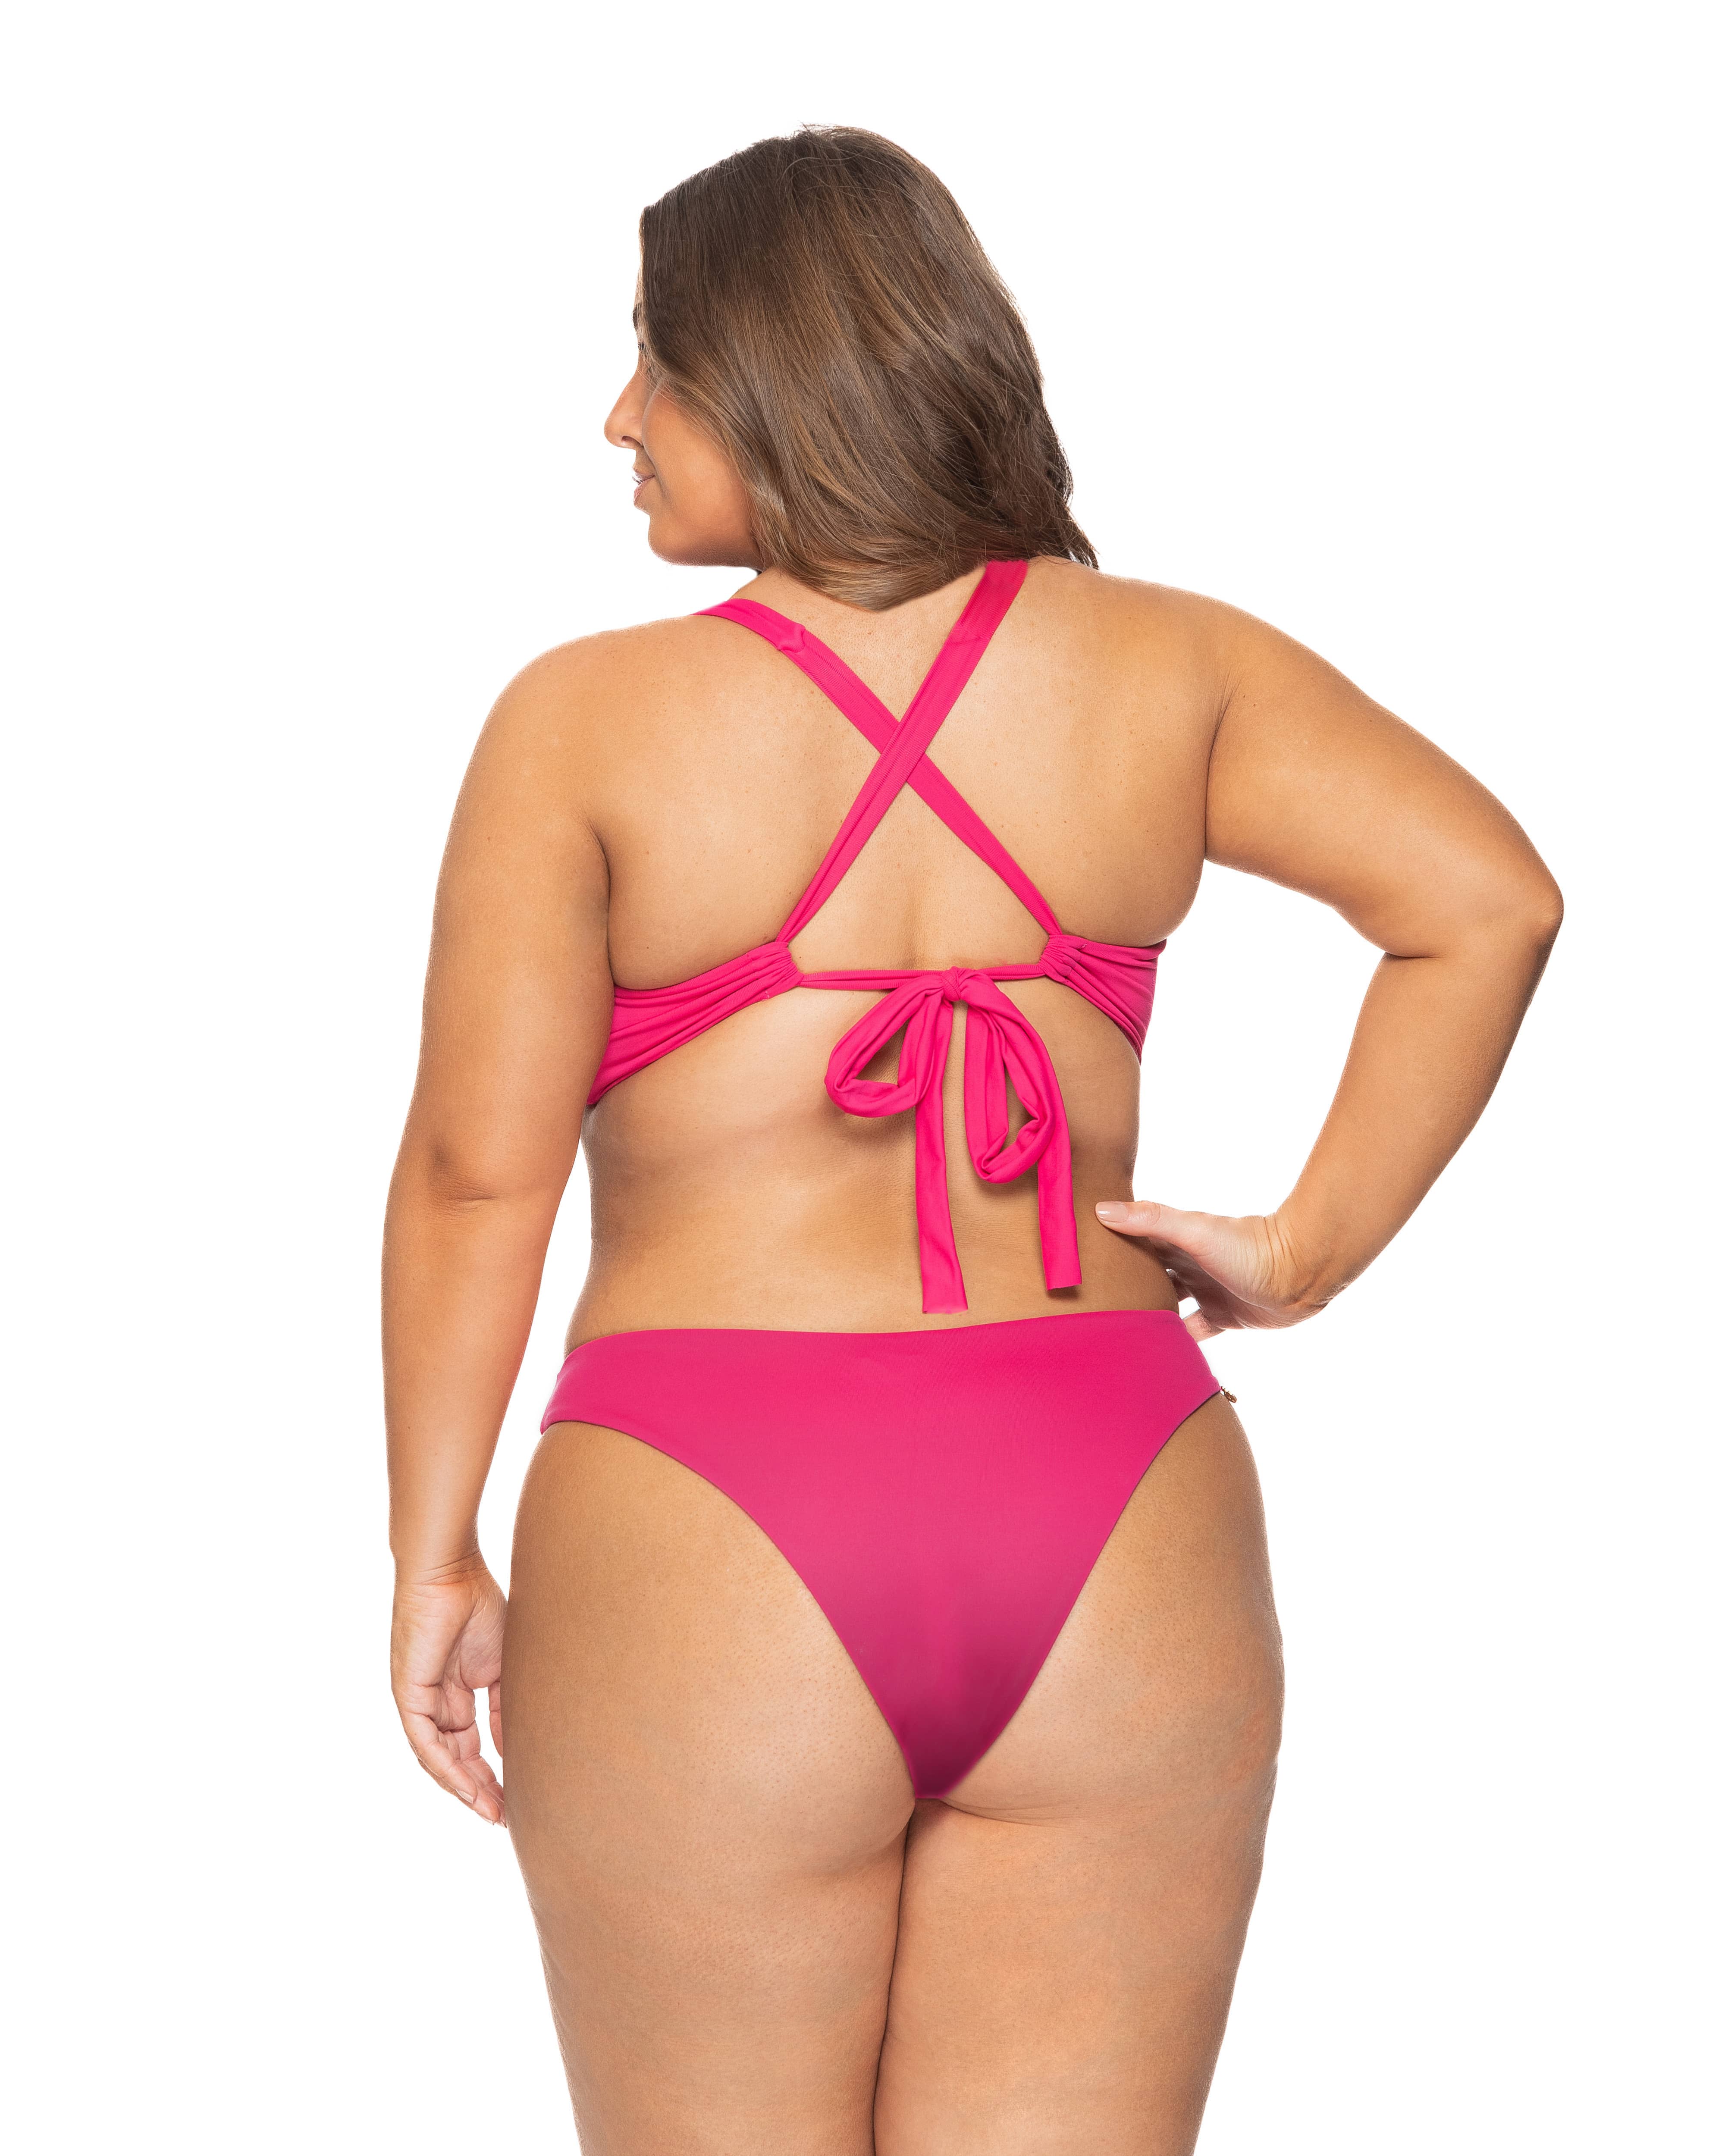 Carol Pink Bikini set - Lybethras Swimwear 